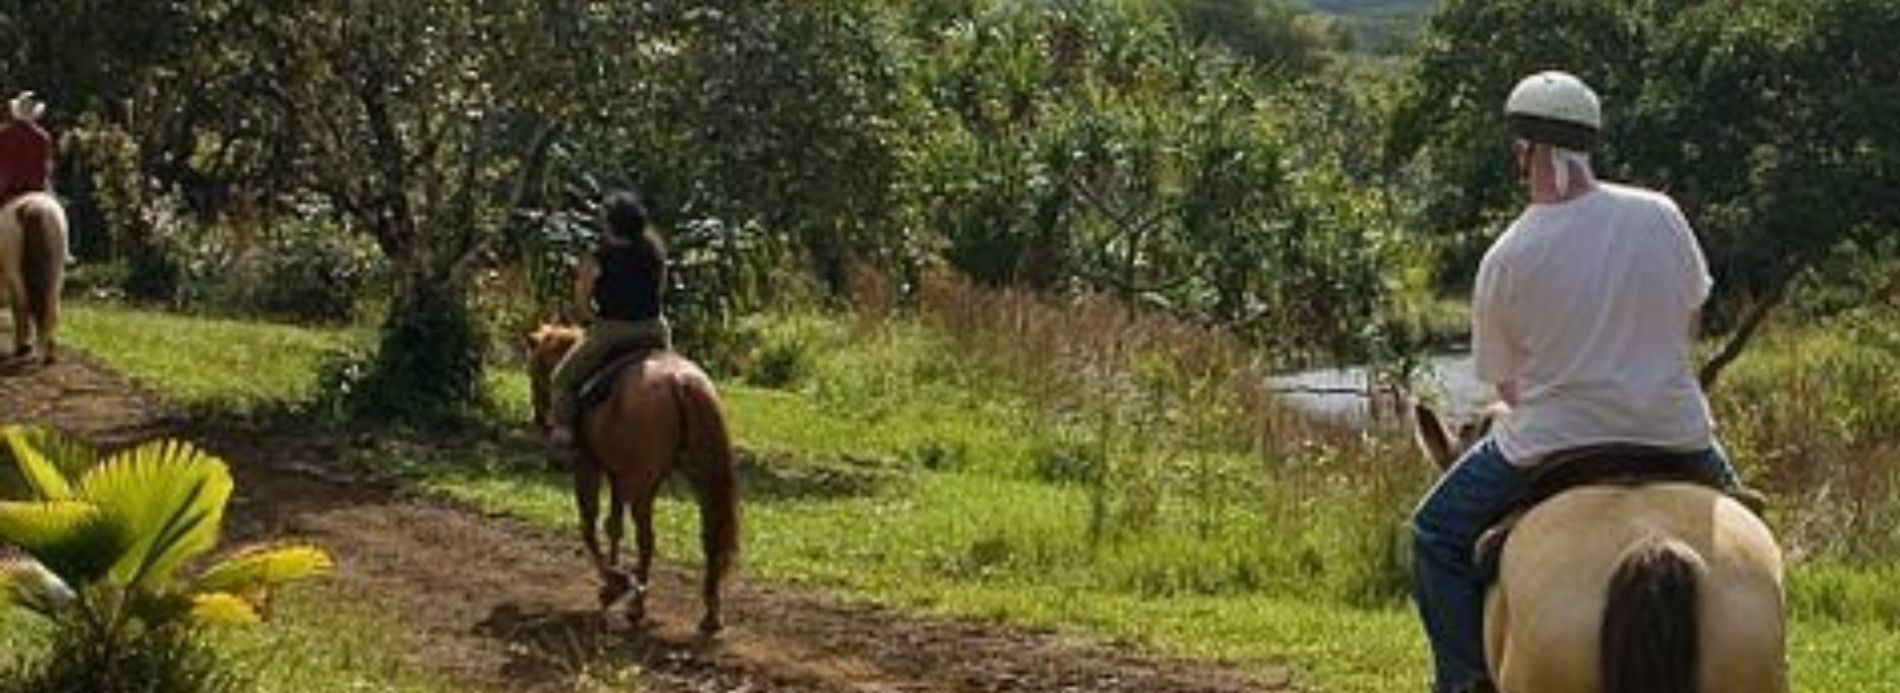 Horseback riding on kauai